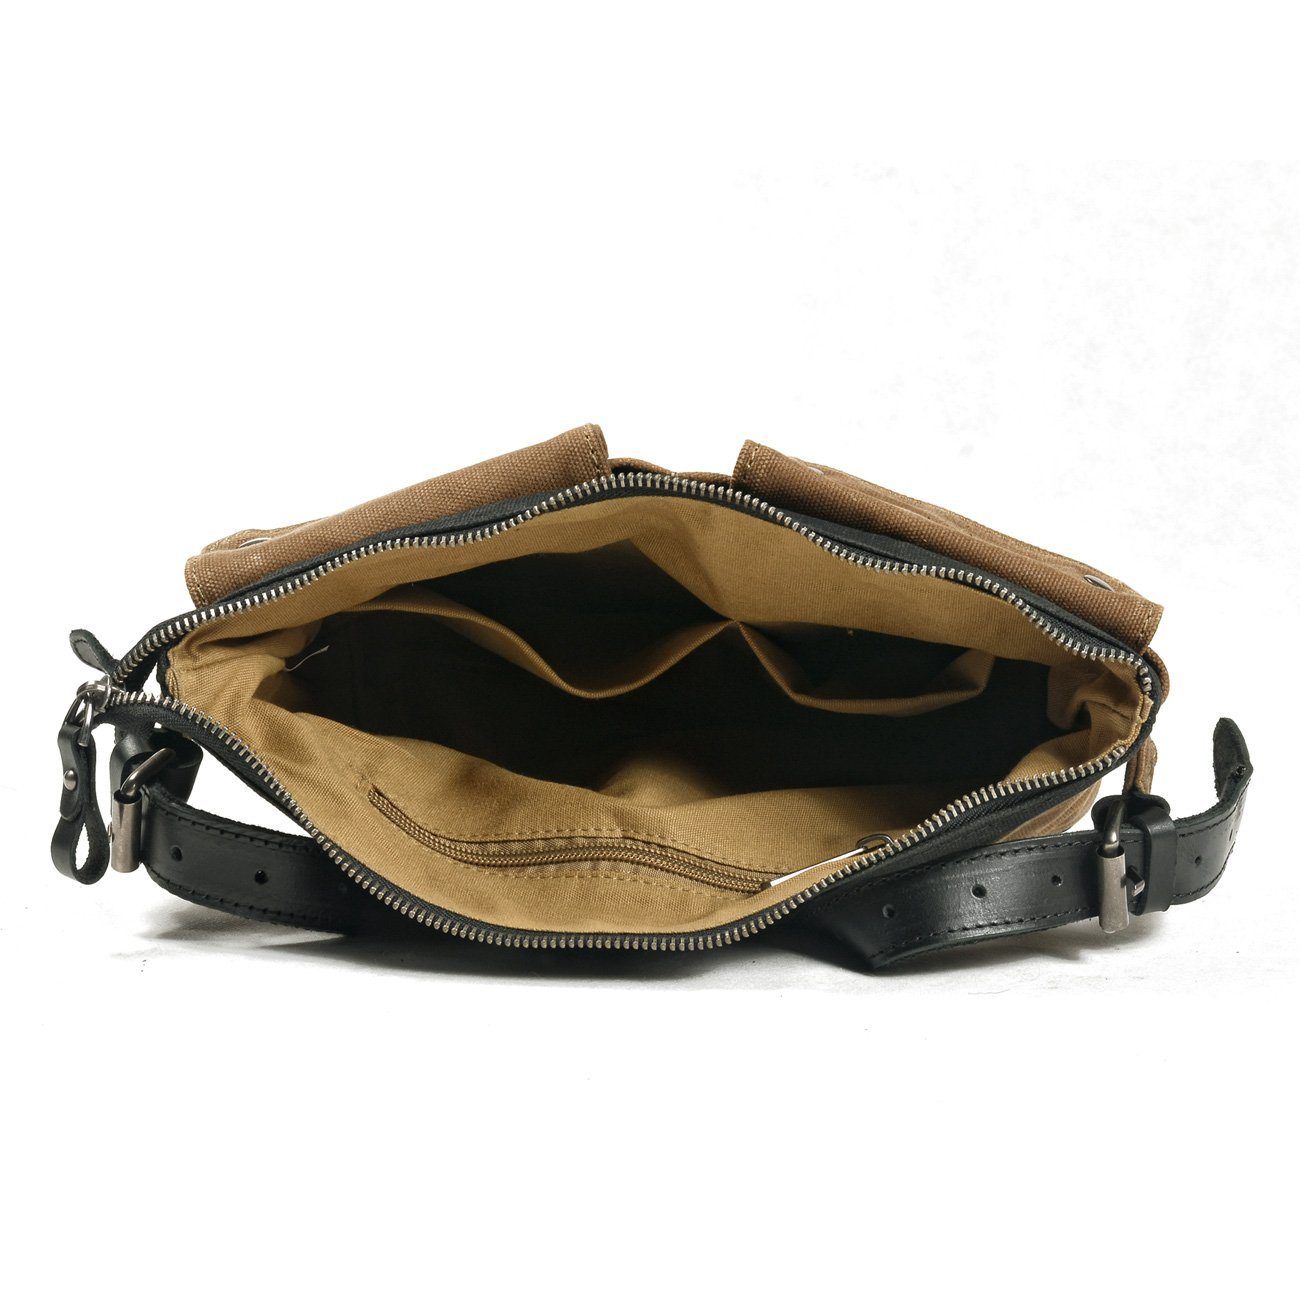 Men's Retro Canvas Shoulder Bag; Messenger Bag, Cross-body Bag